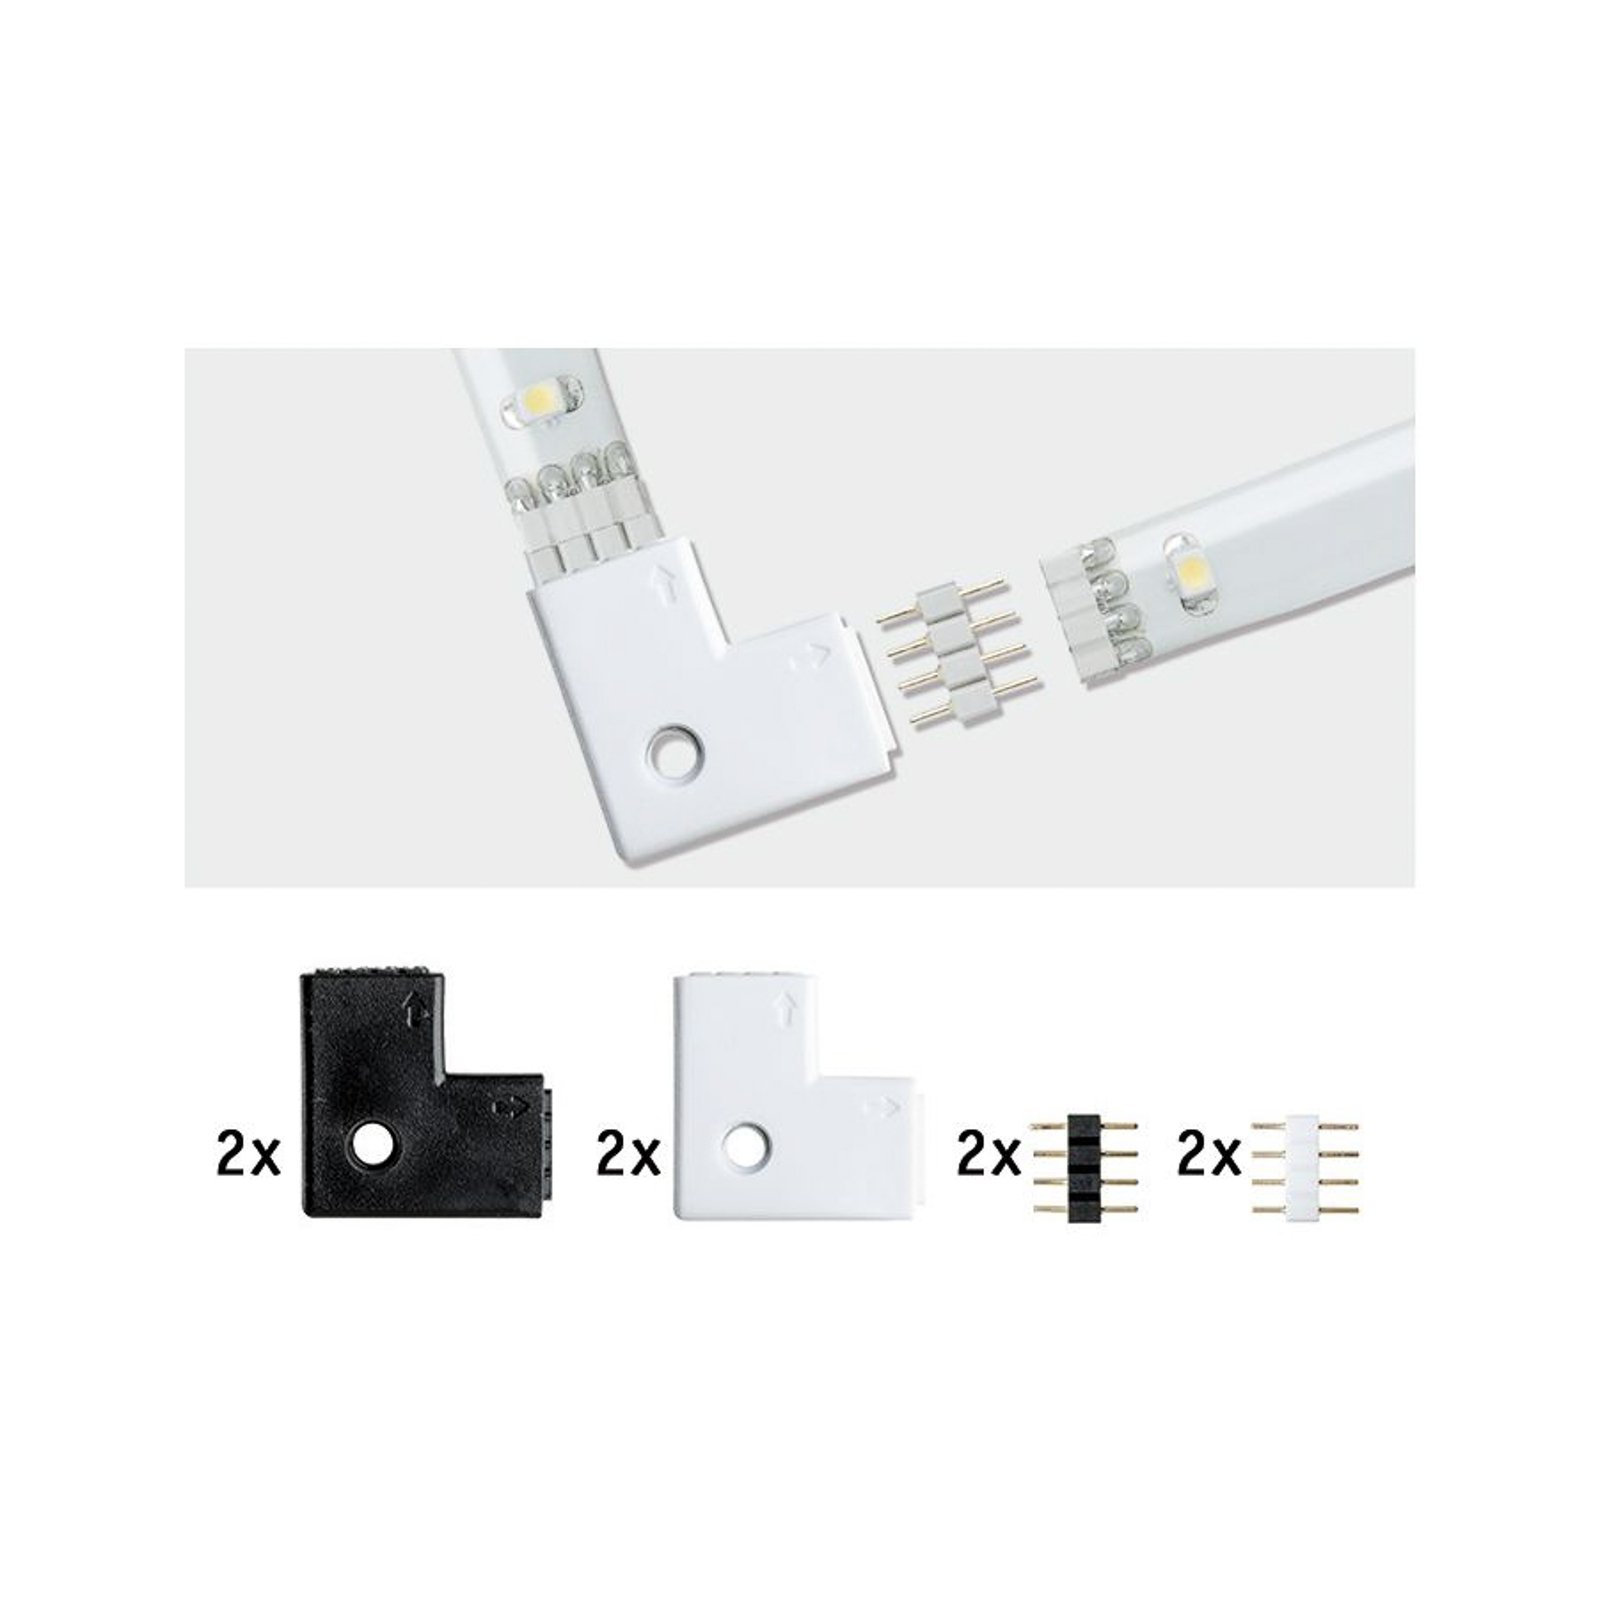 Hoekconnector voor YOUR LED Stripe-Sytem set van 4